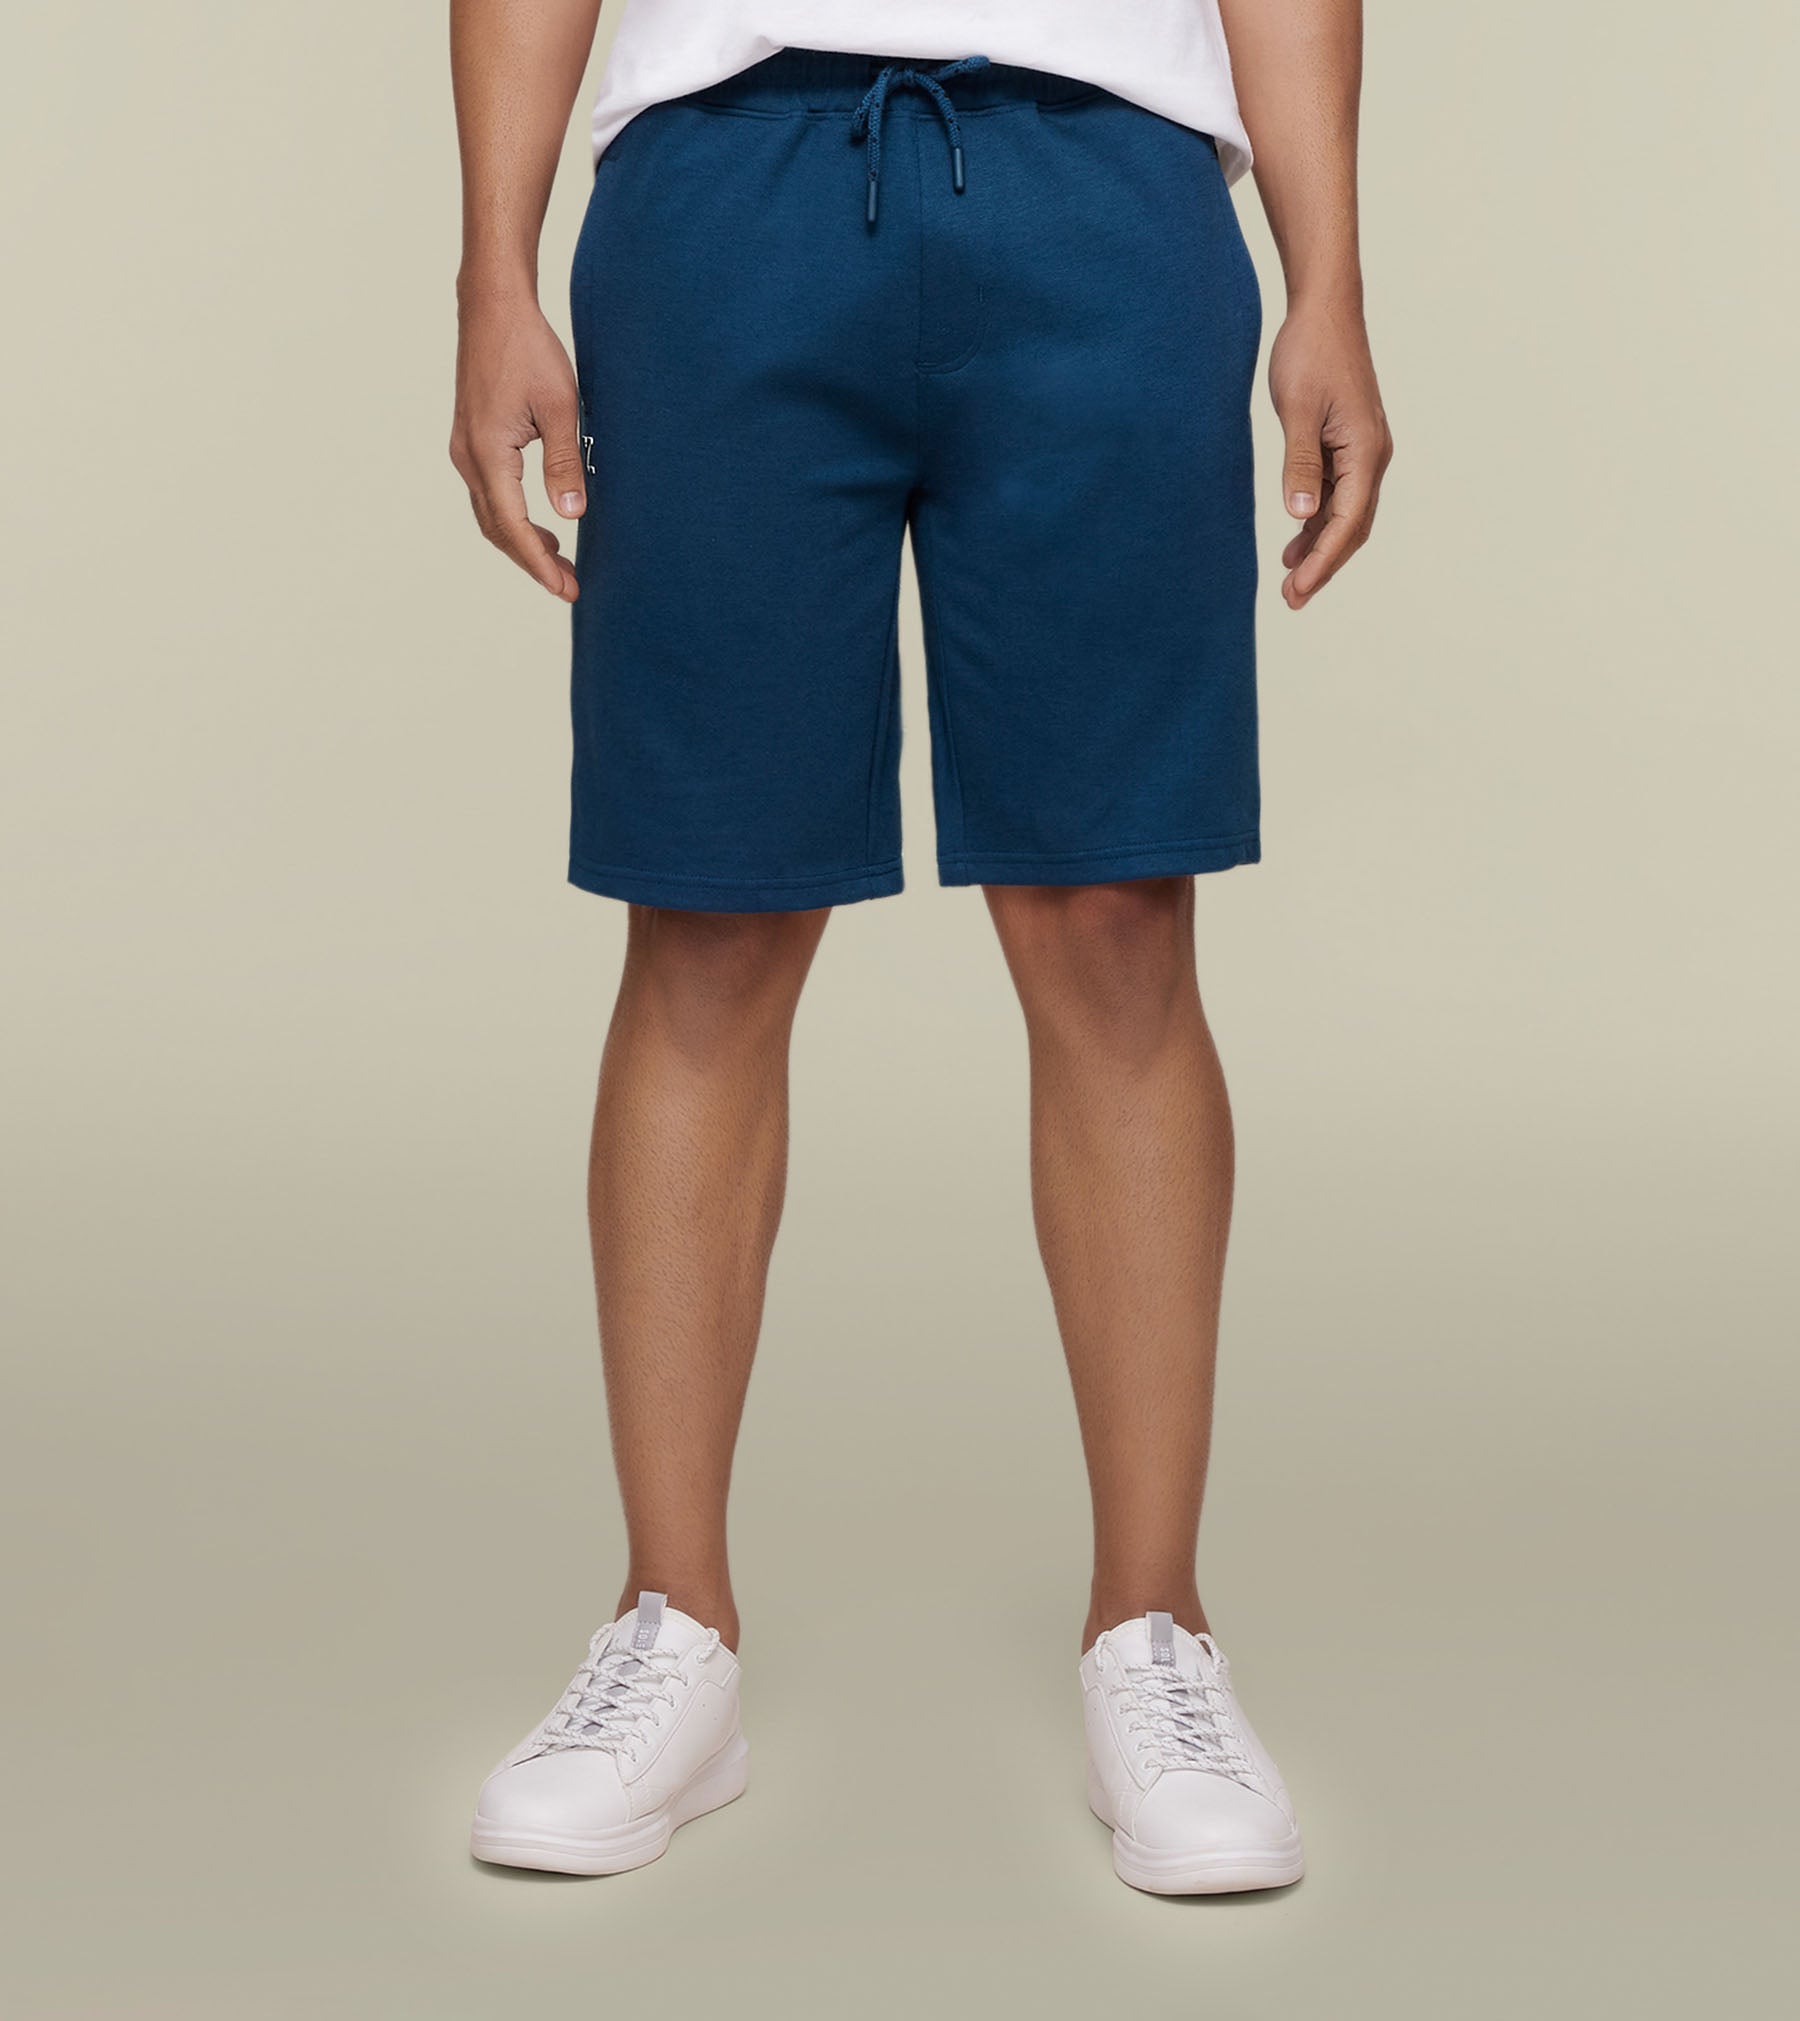 Code Cotton Rich Shorts For Men Oxford Blue - XYXX Crew